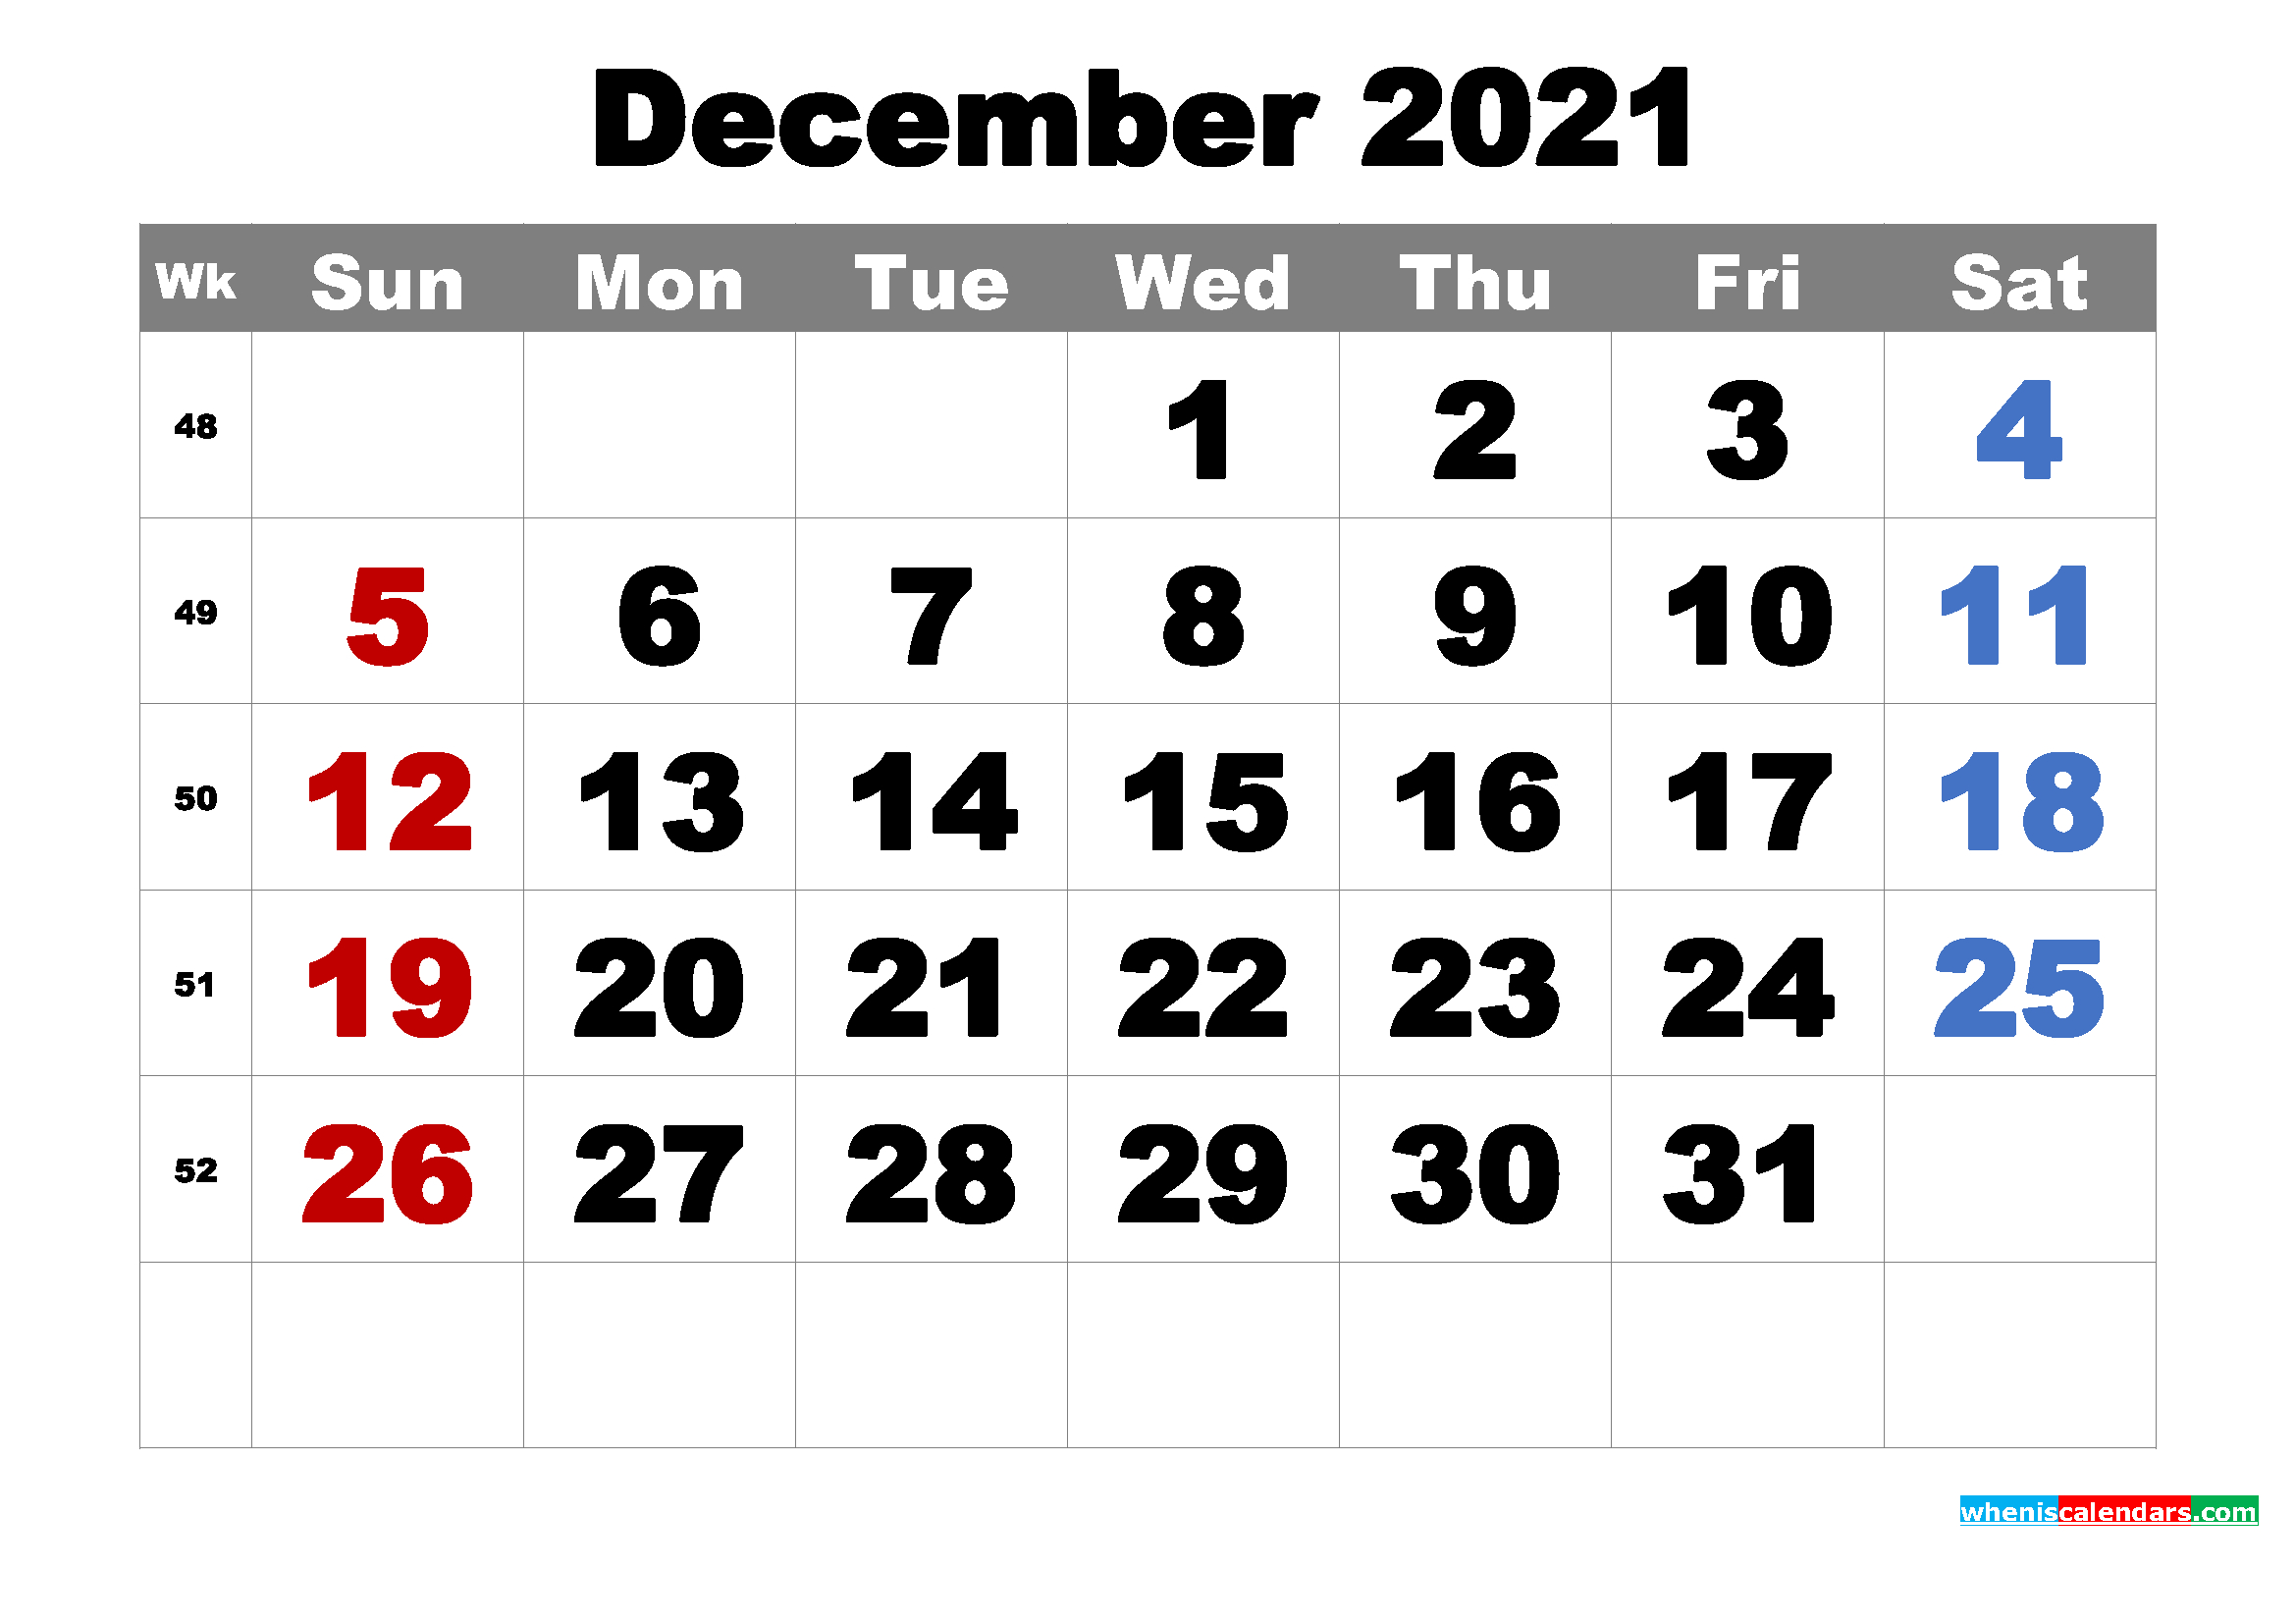 Free Printable December 2021 Calendar Word, Pdf, Image 2021 Calendar From January To December